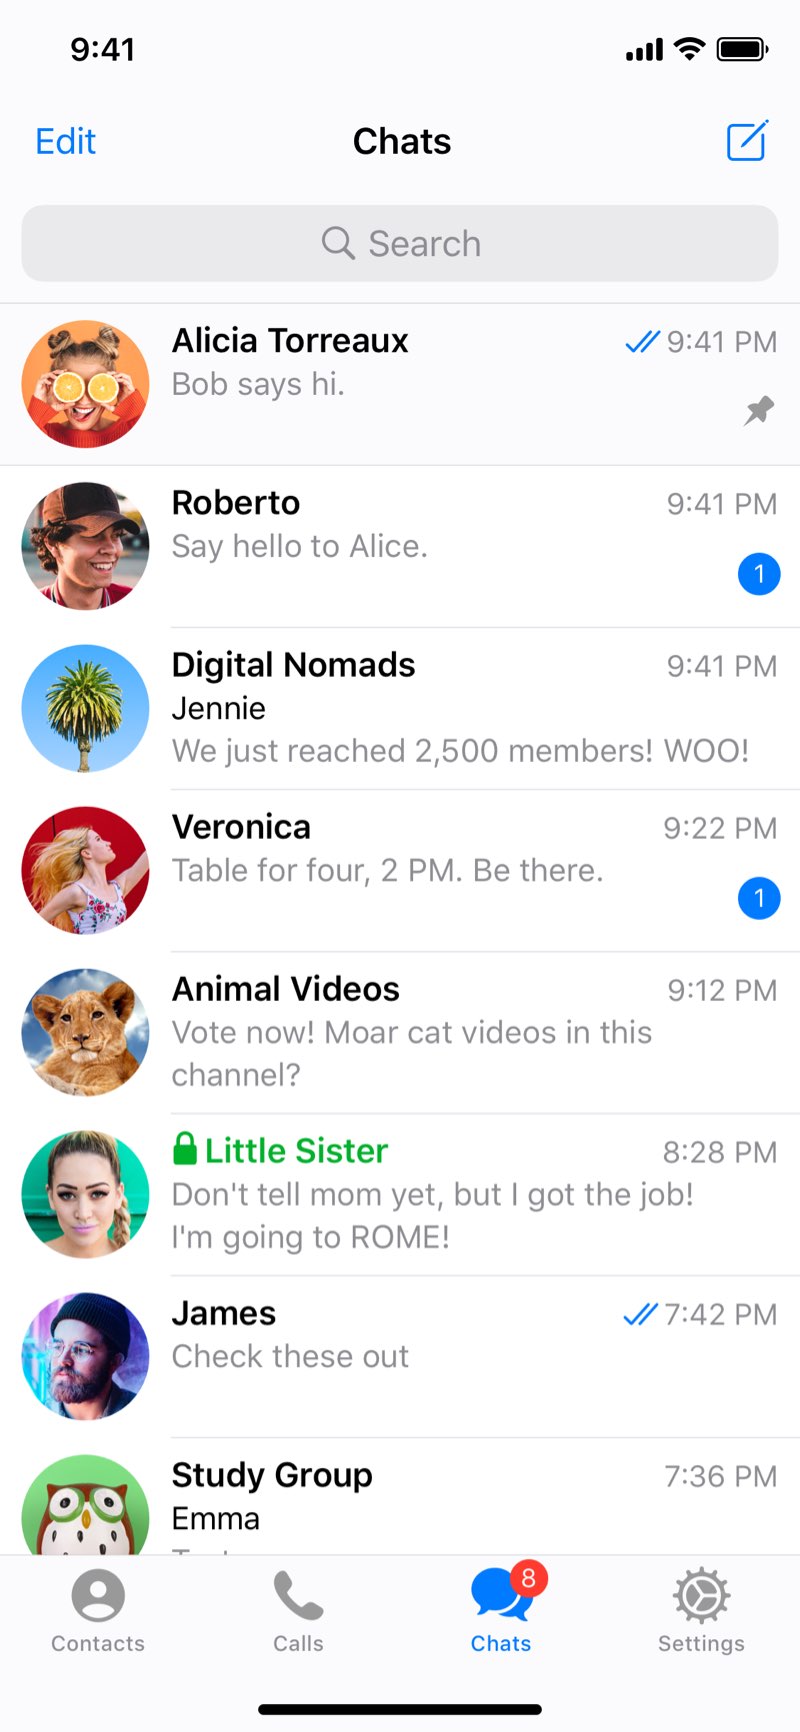 List of chats, main screen of the Telegram app